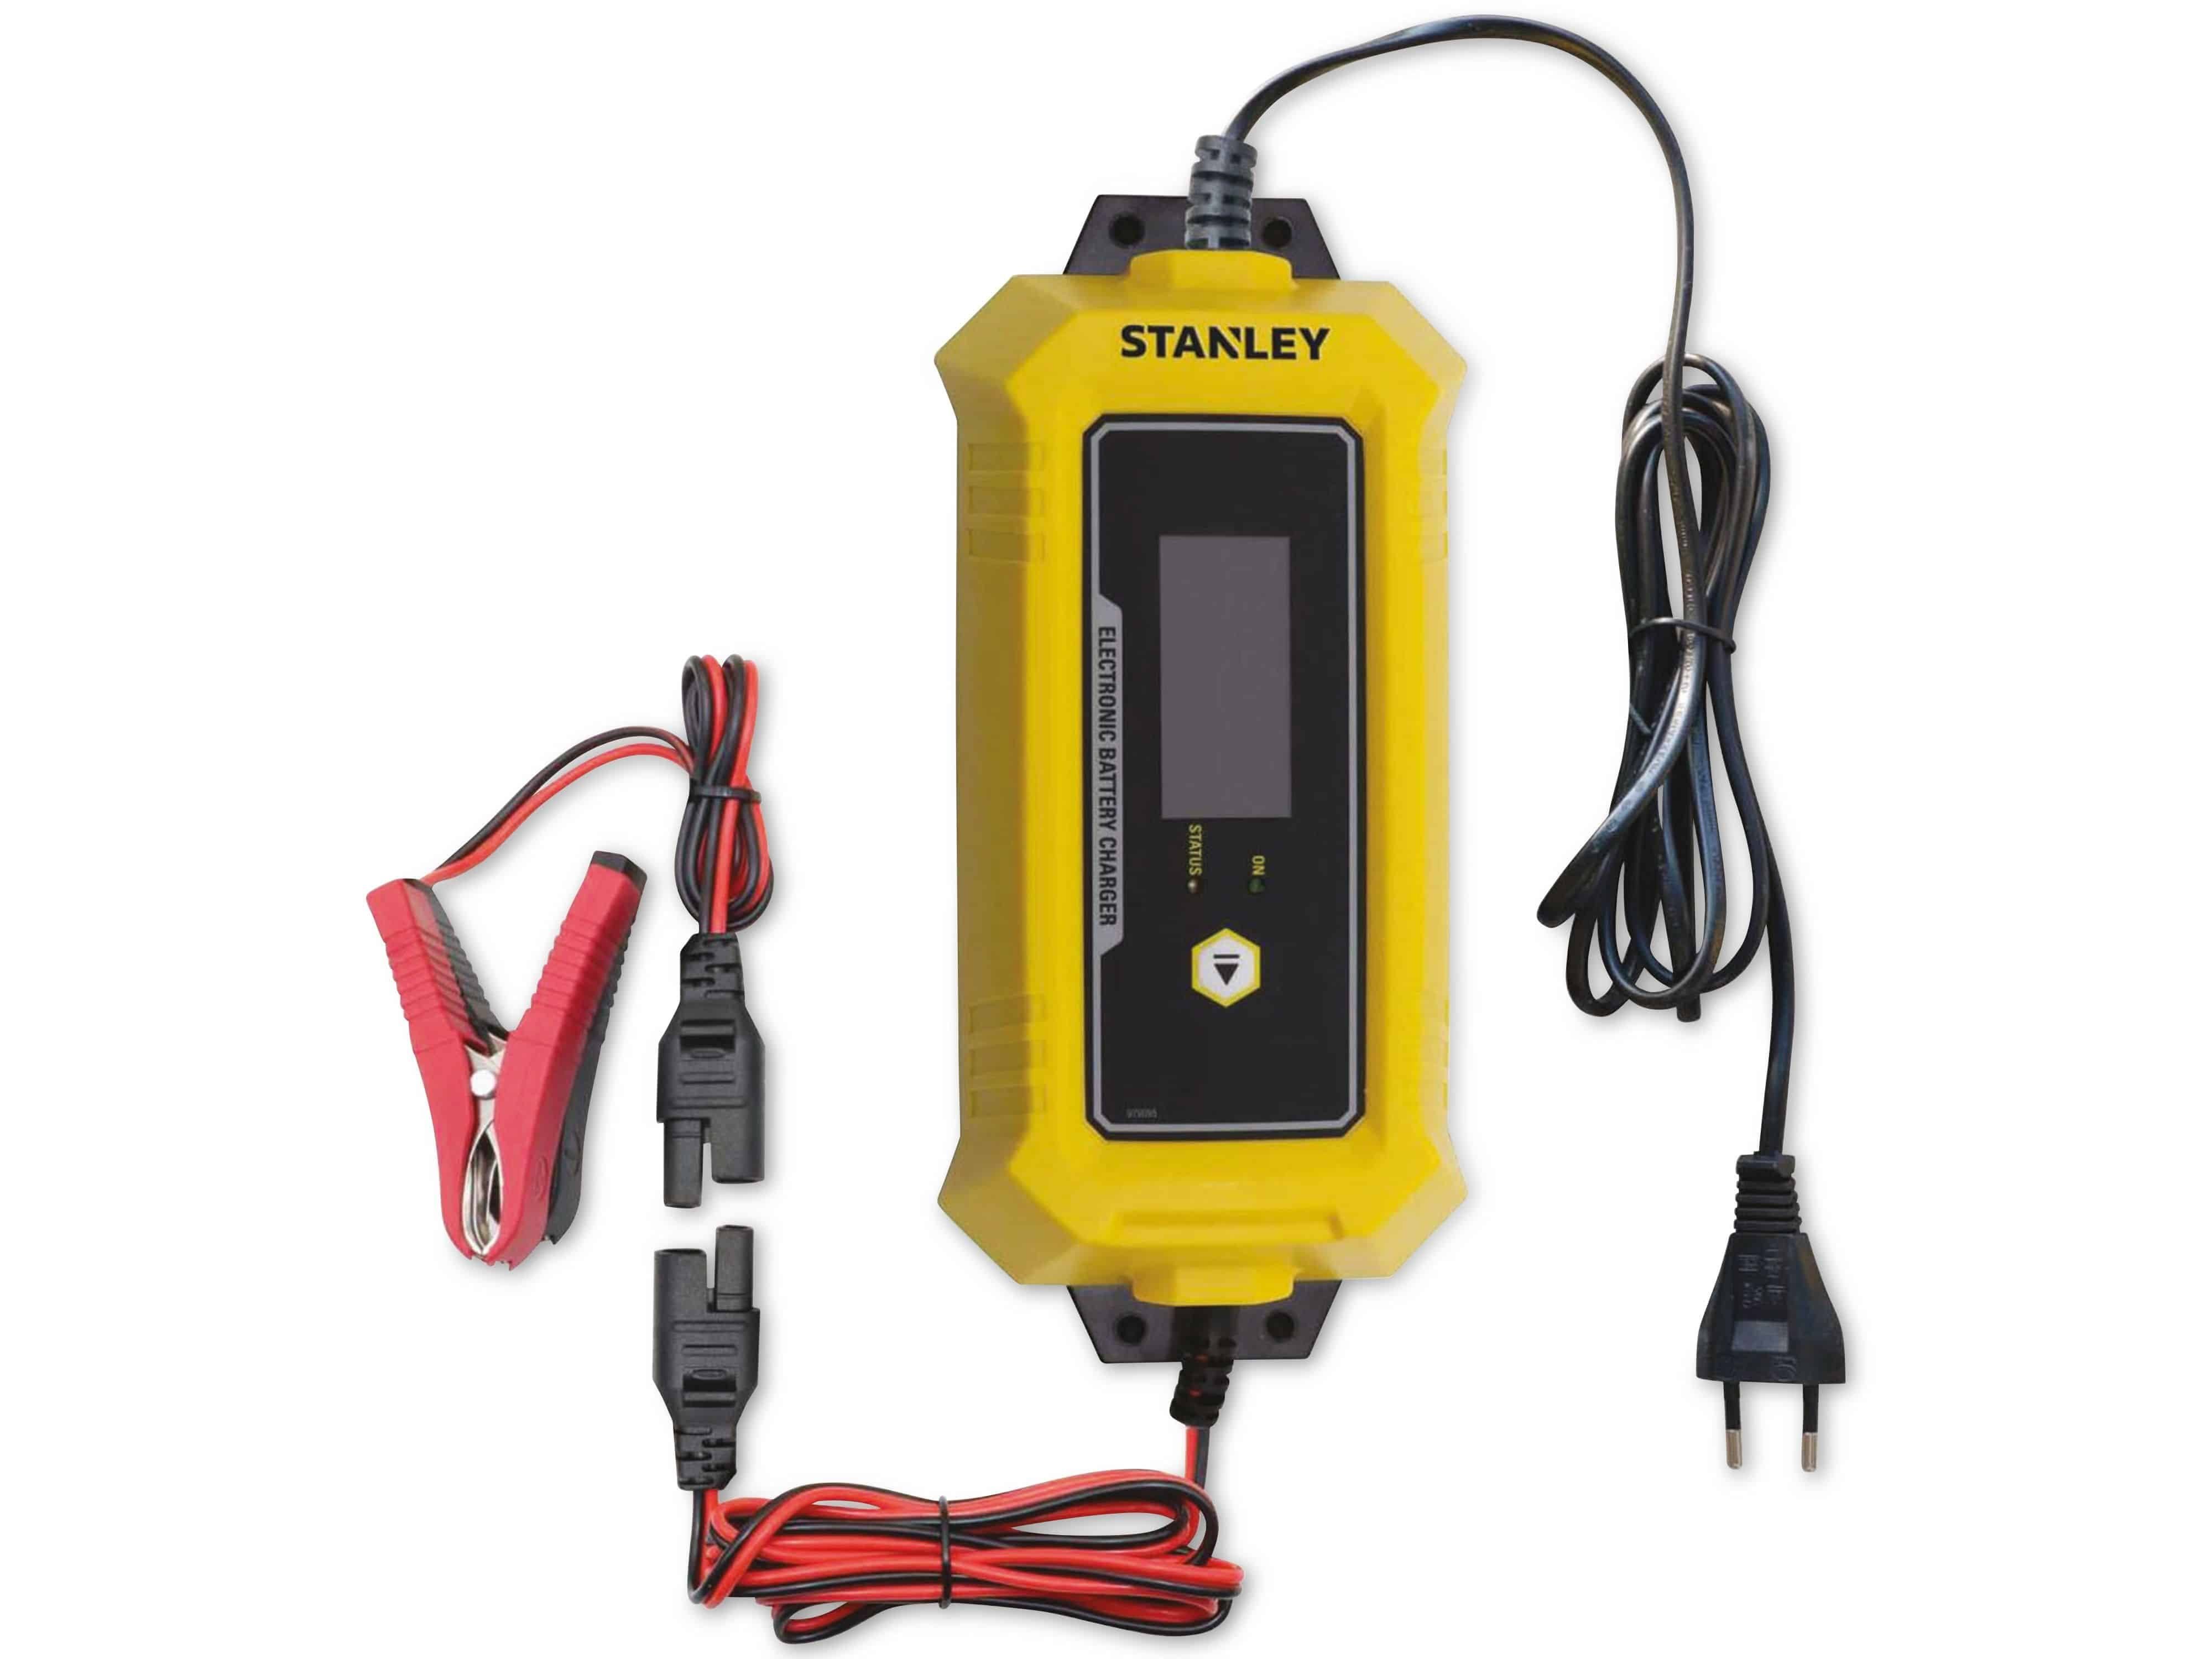 Batterie 8A, STANLEY 12V, STANLEY Batterie-Ladegerät, für